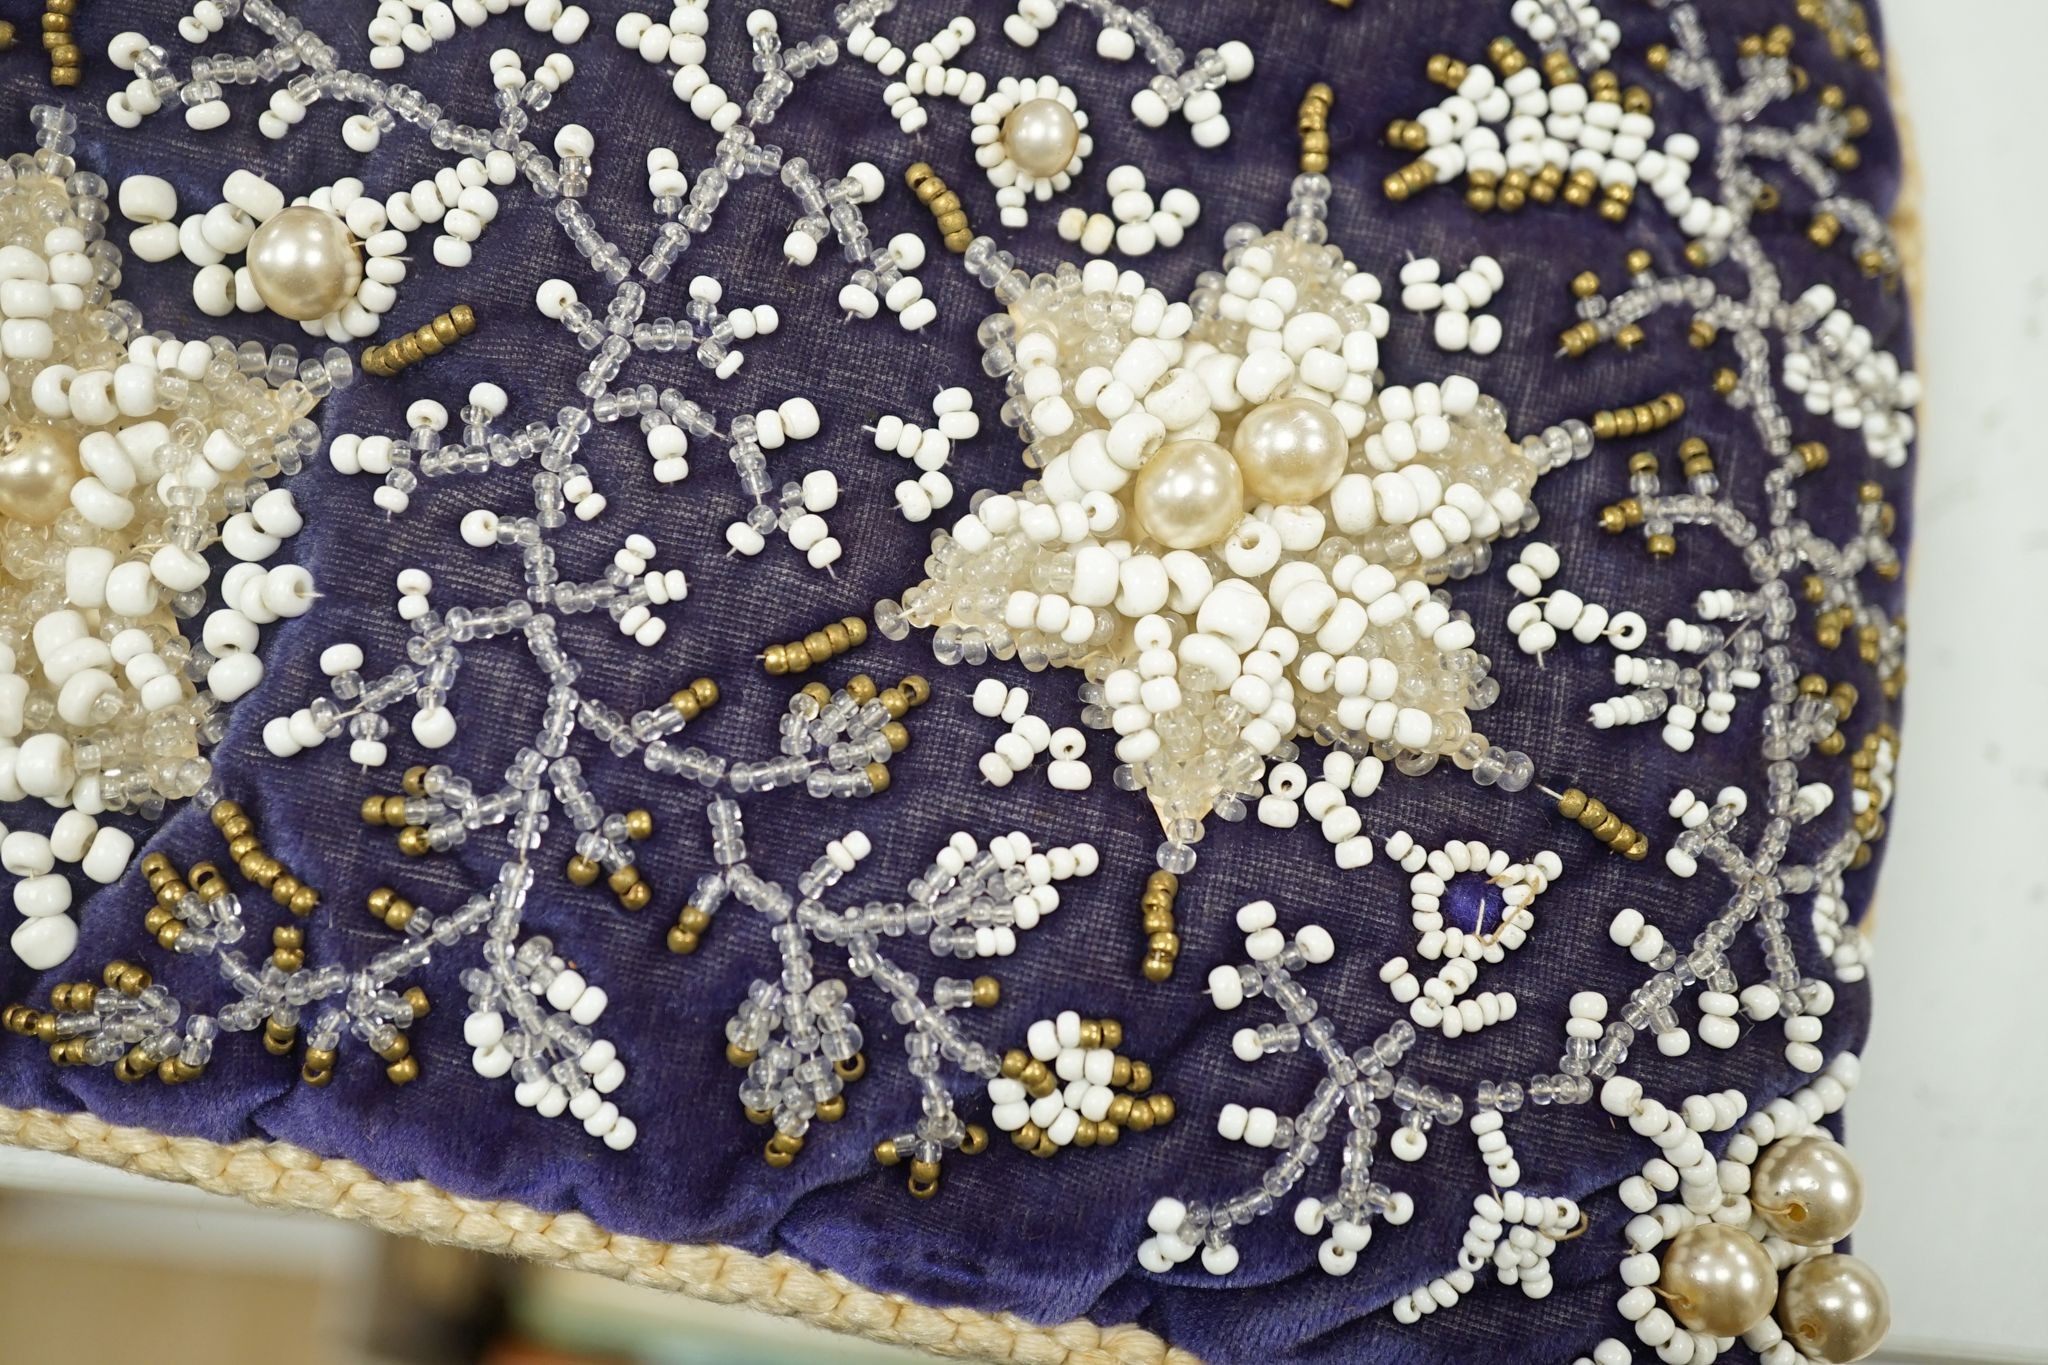 A 19th century Berlin bead worked tea cosy on purple velvet with a similar cushion, Cushion 36 cms wide x 32 high.